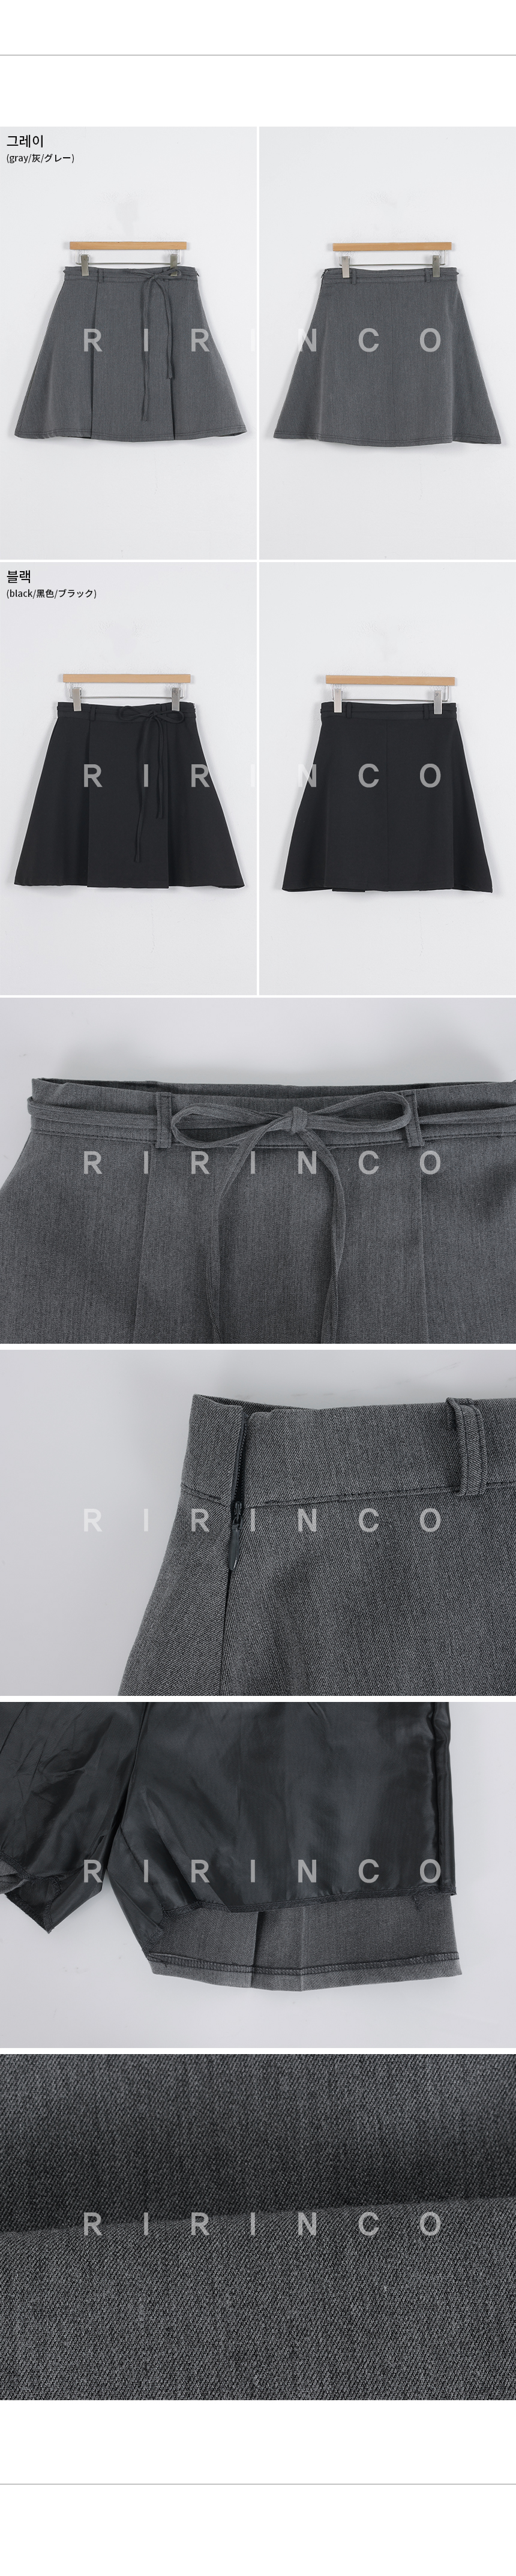 RIRINCO リボンストラッププリーツミニスカート